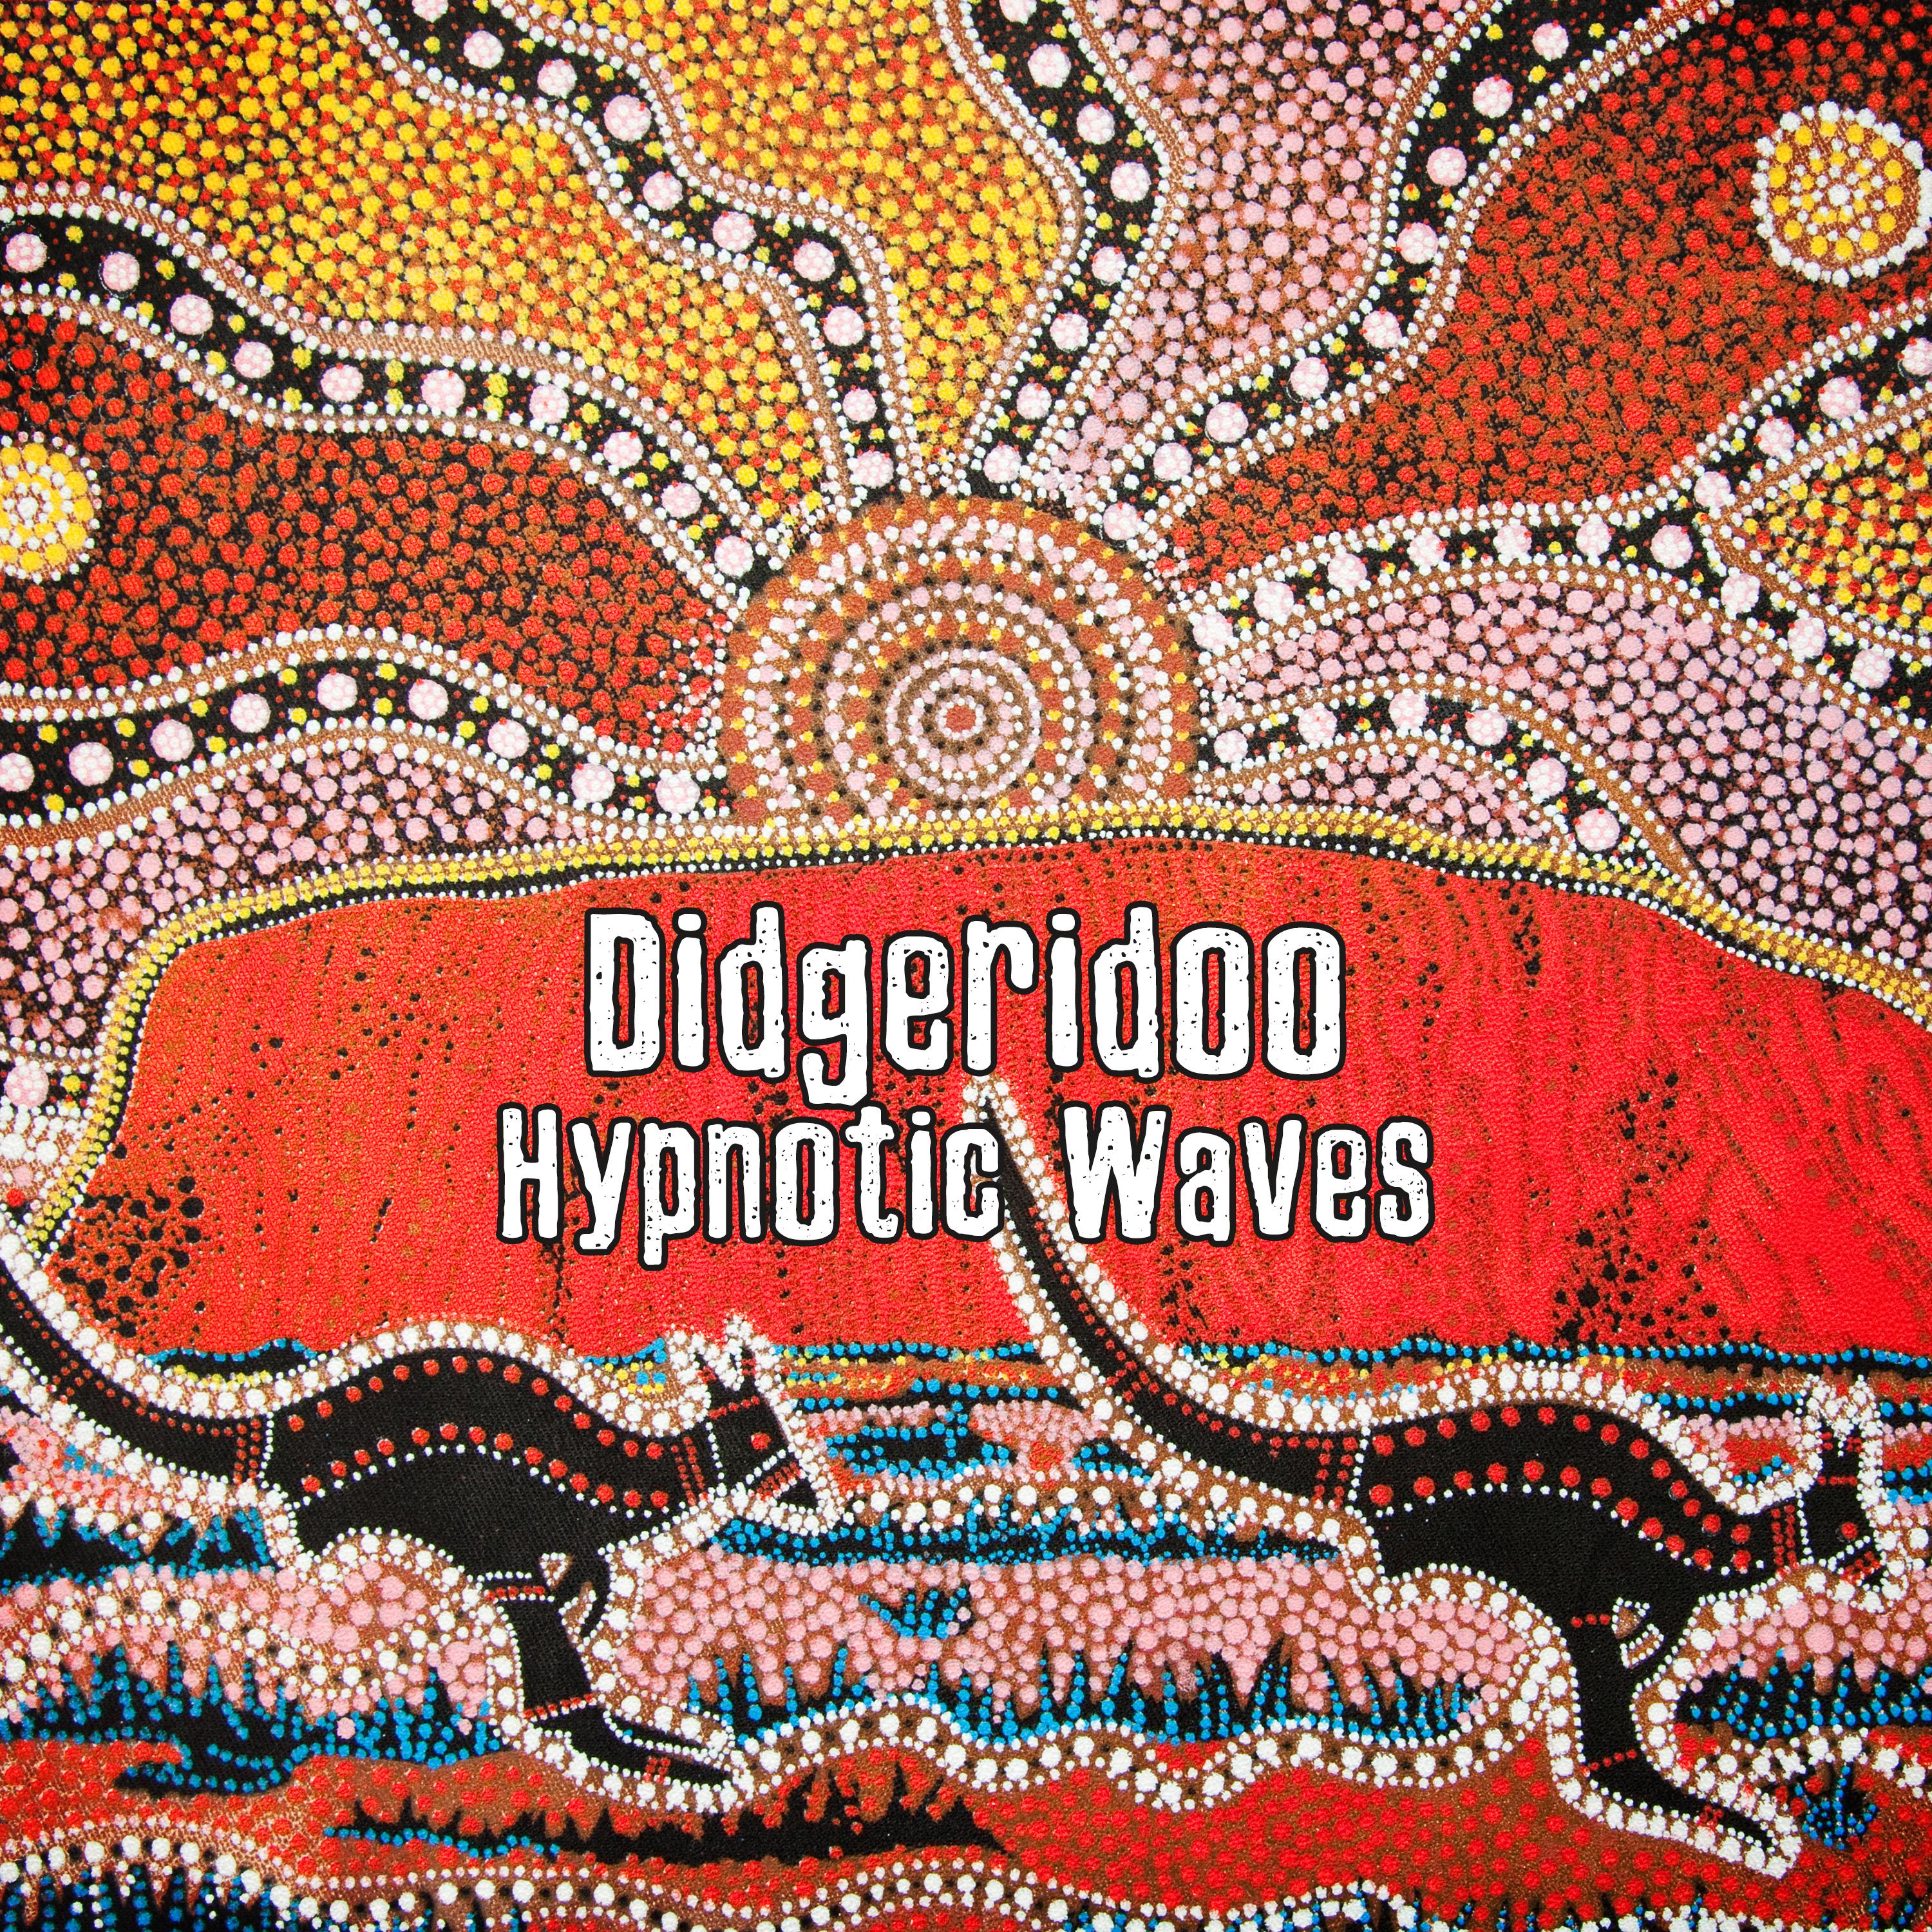 Didgeridoo Hypnotic Waves - Shamanic Grounding, Meditation Music, Spiritual Journey